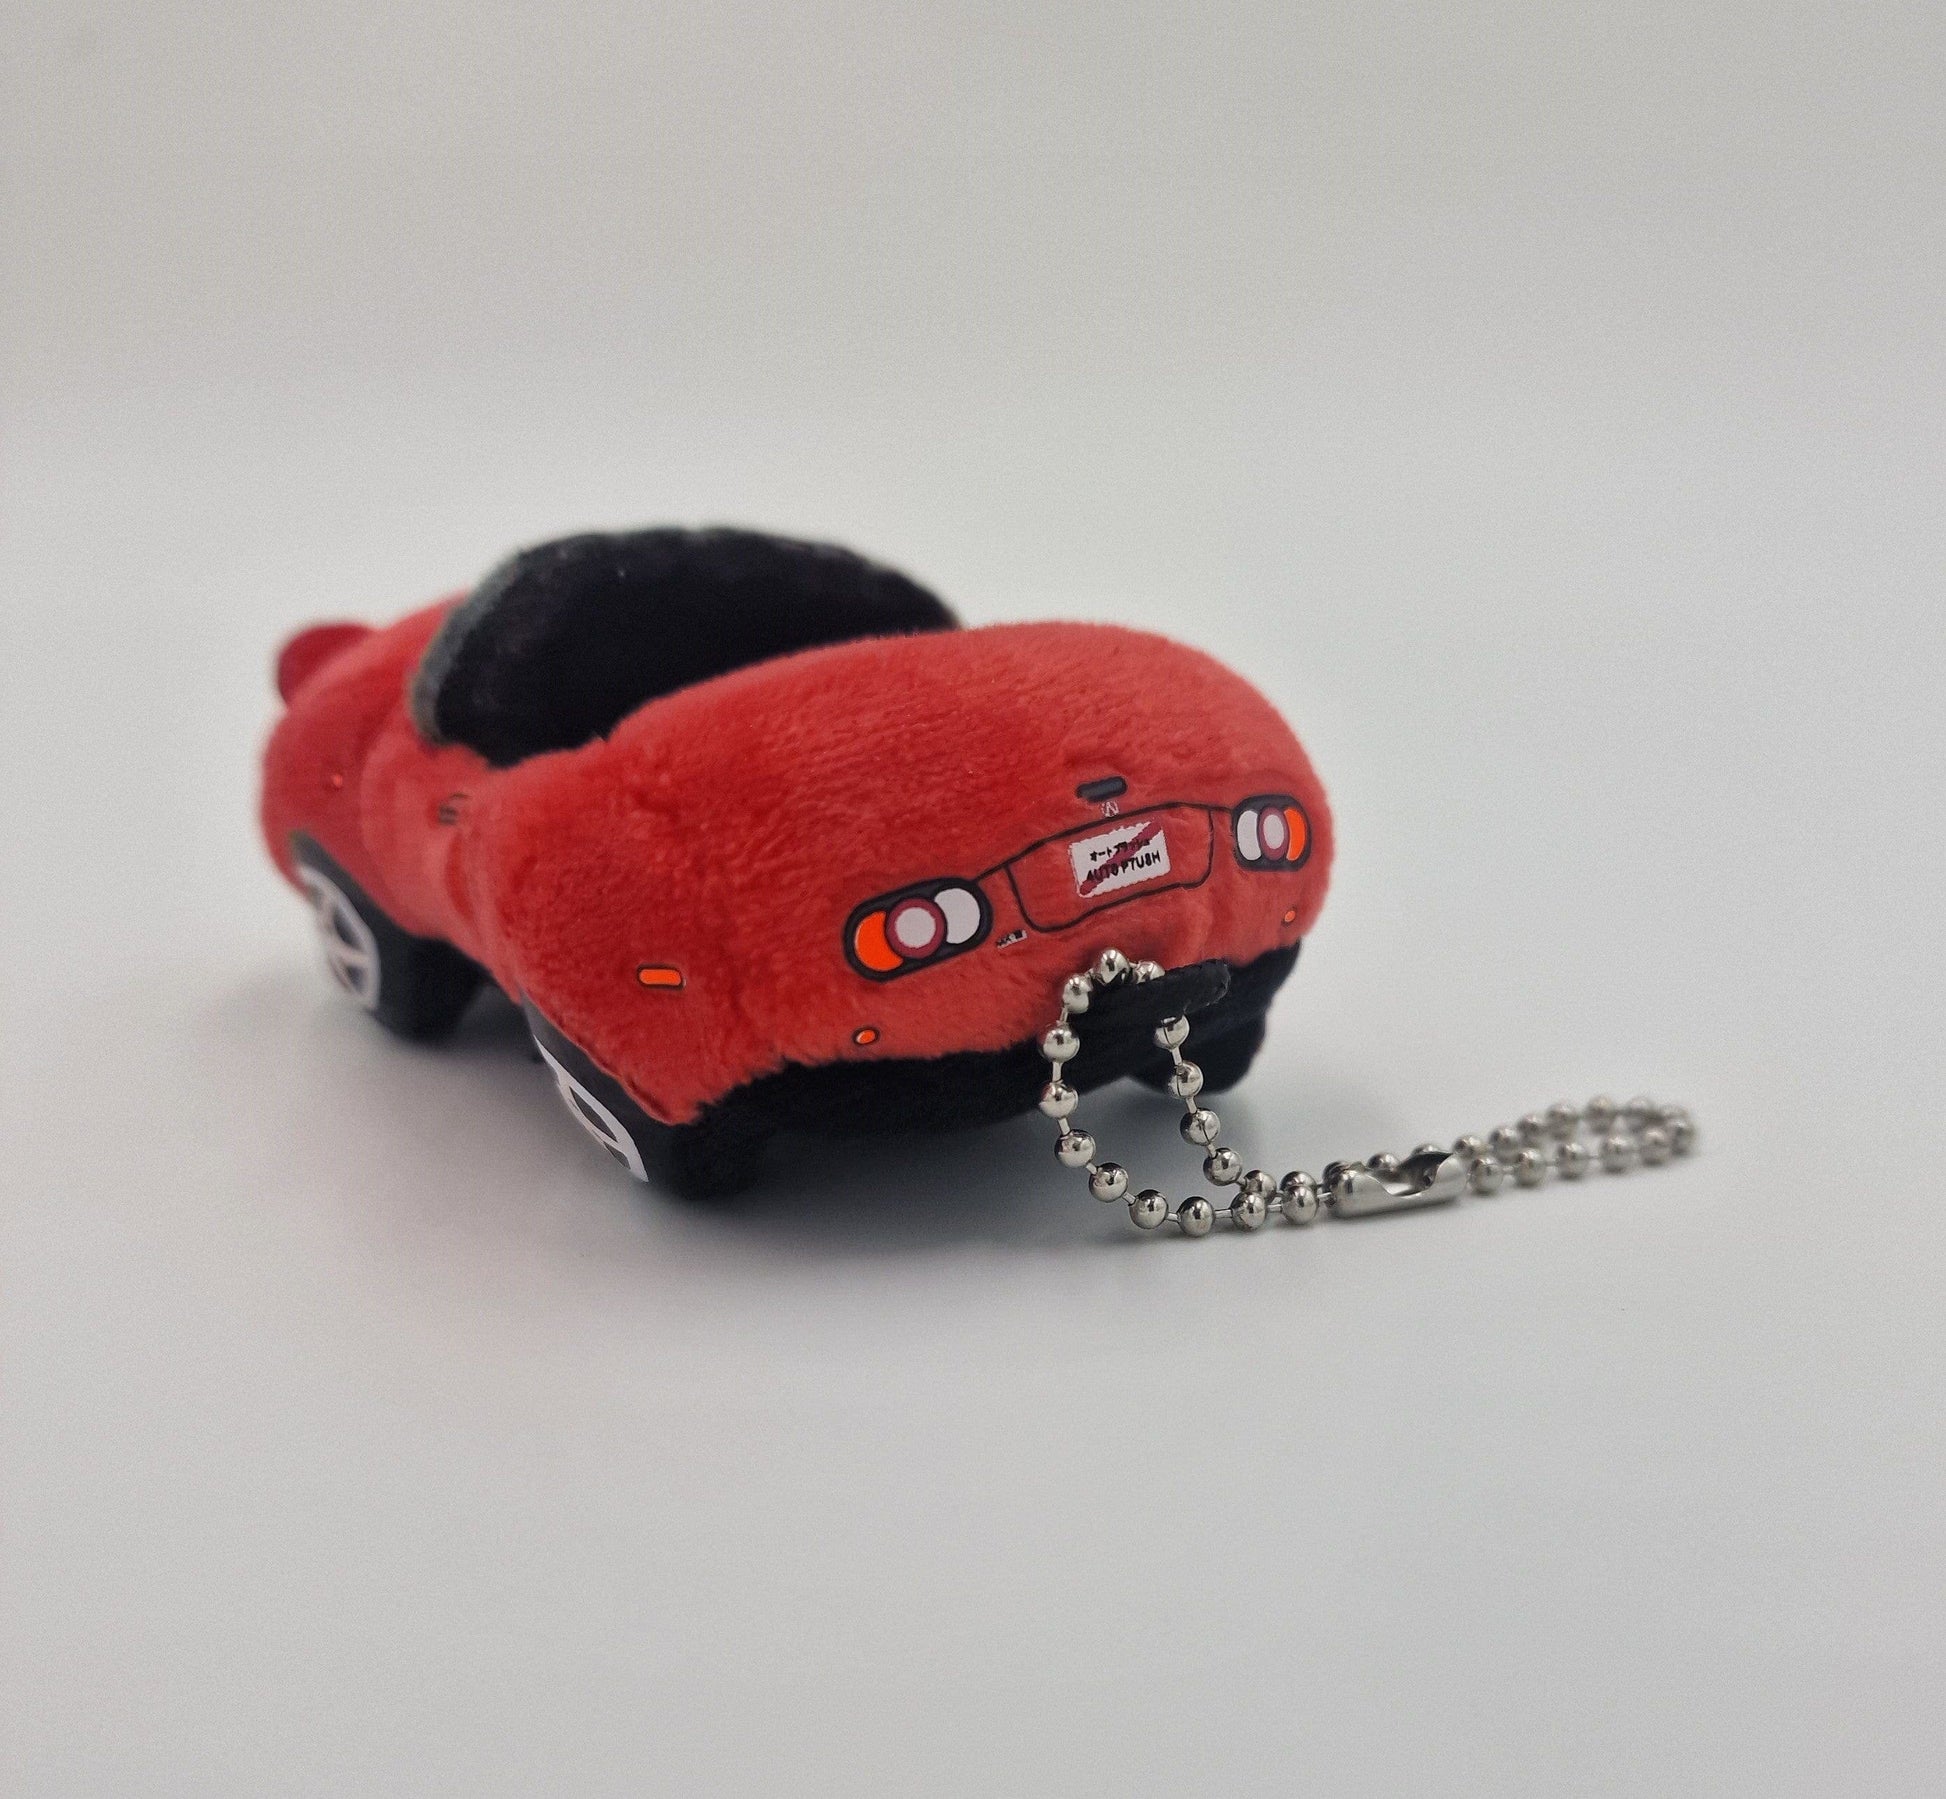 Autoplush Red Miata MX5 Keychain Plush Toy Car Soft Pillow